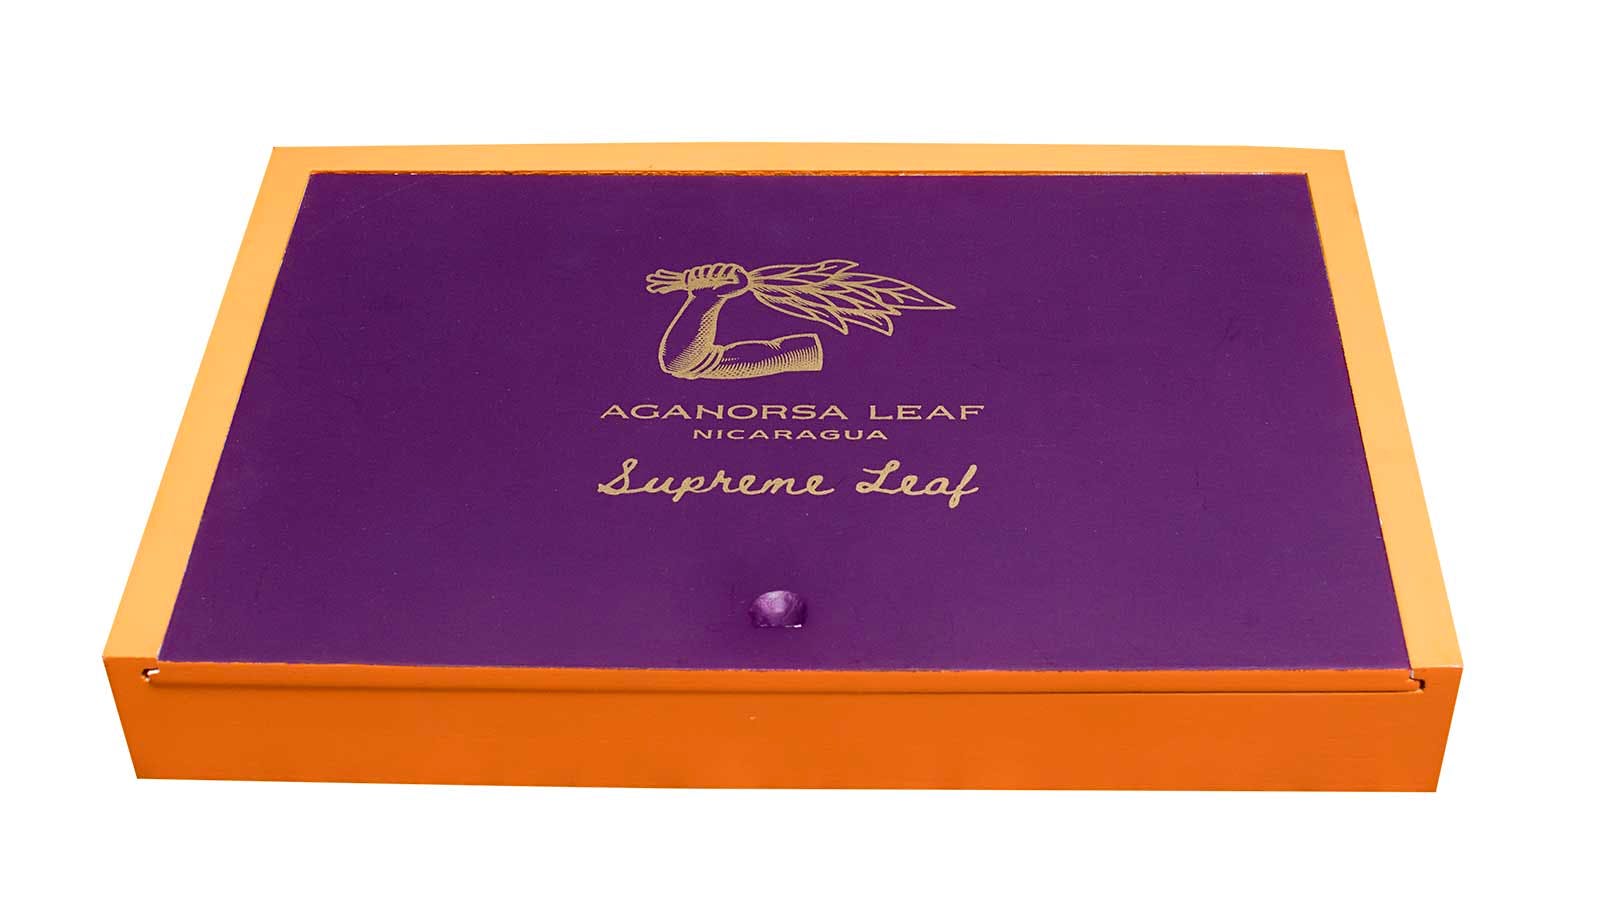 Supreme Leaf cigar box